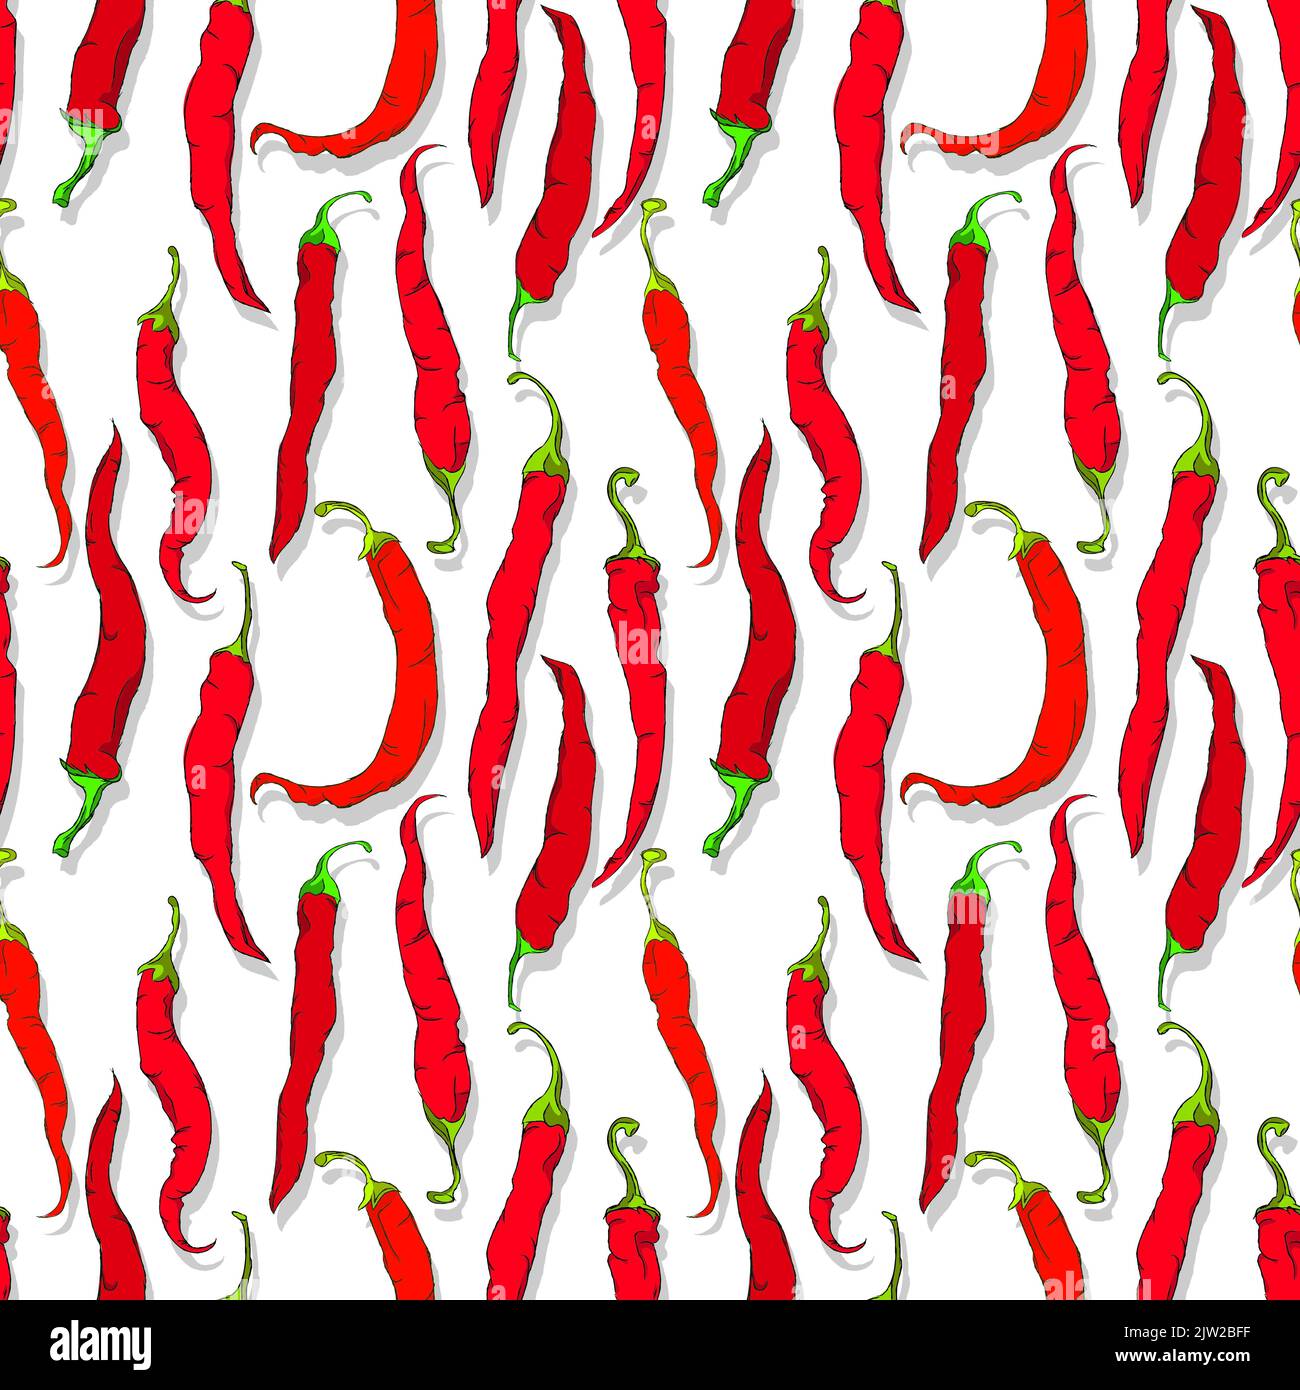 Chilischoten wiederholendes Muster, editierbare Vektorvorlage Stockfoto